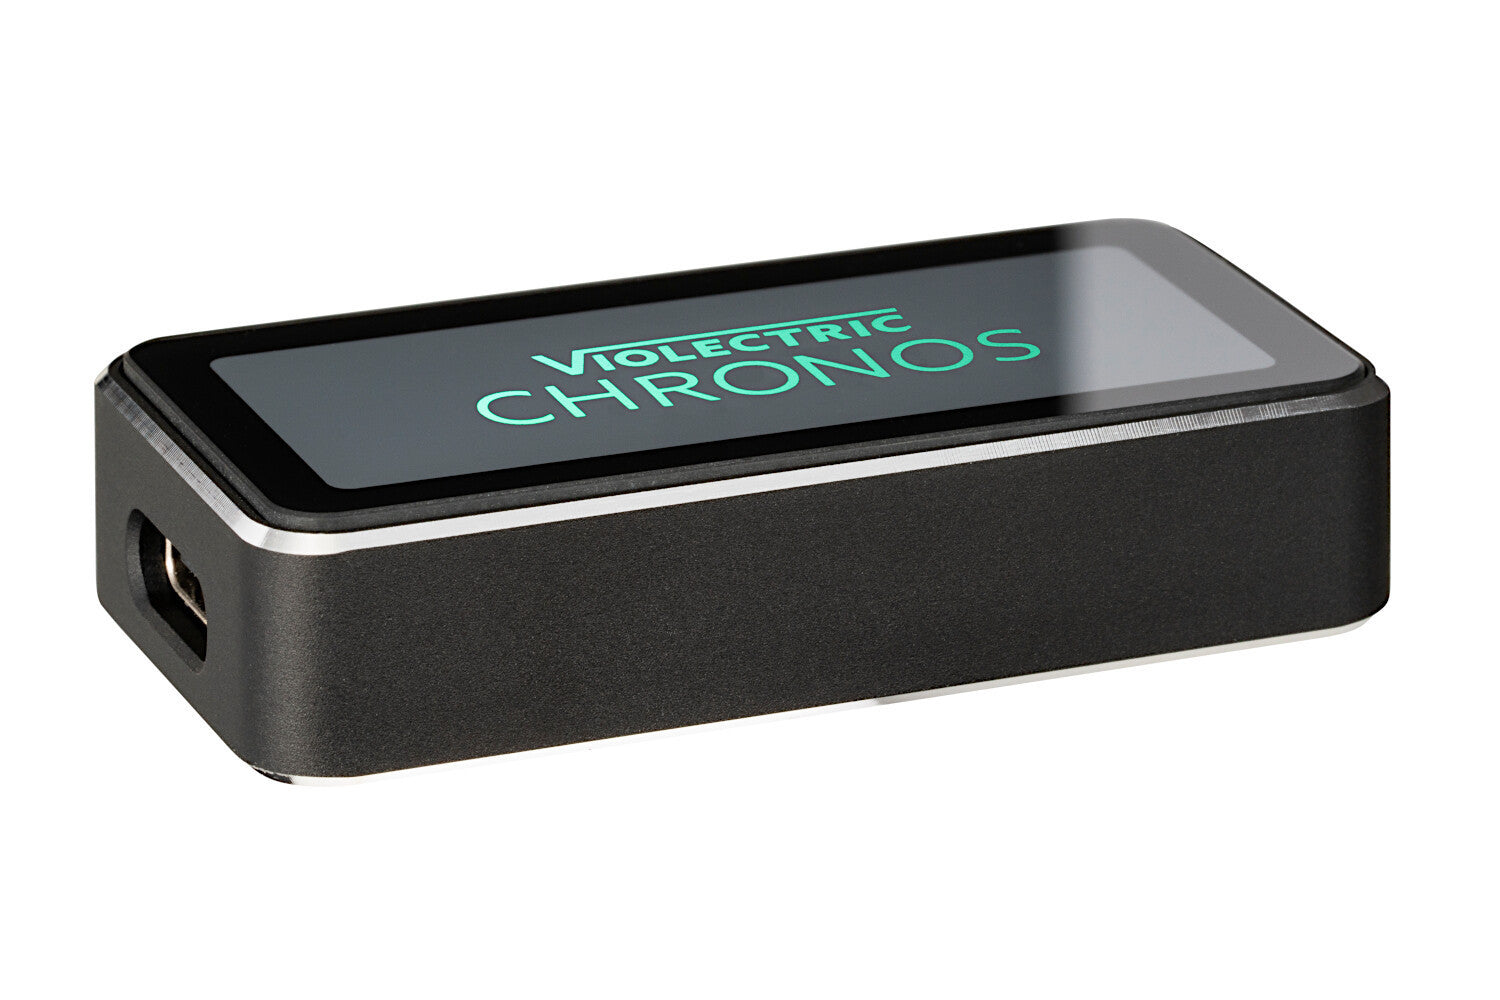 Violectric Chronos DAC/Headphone Amplifier